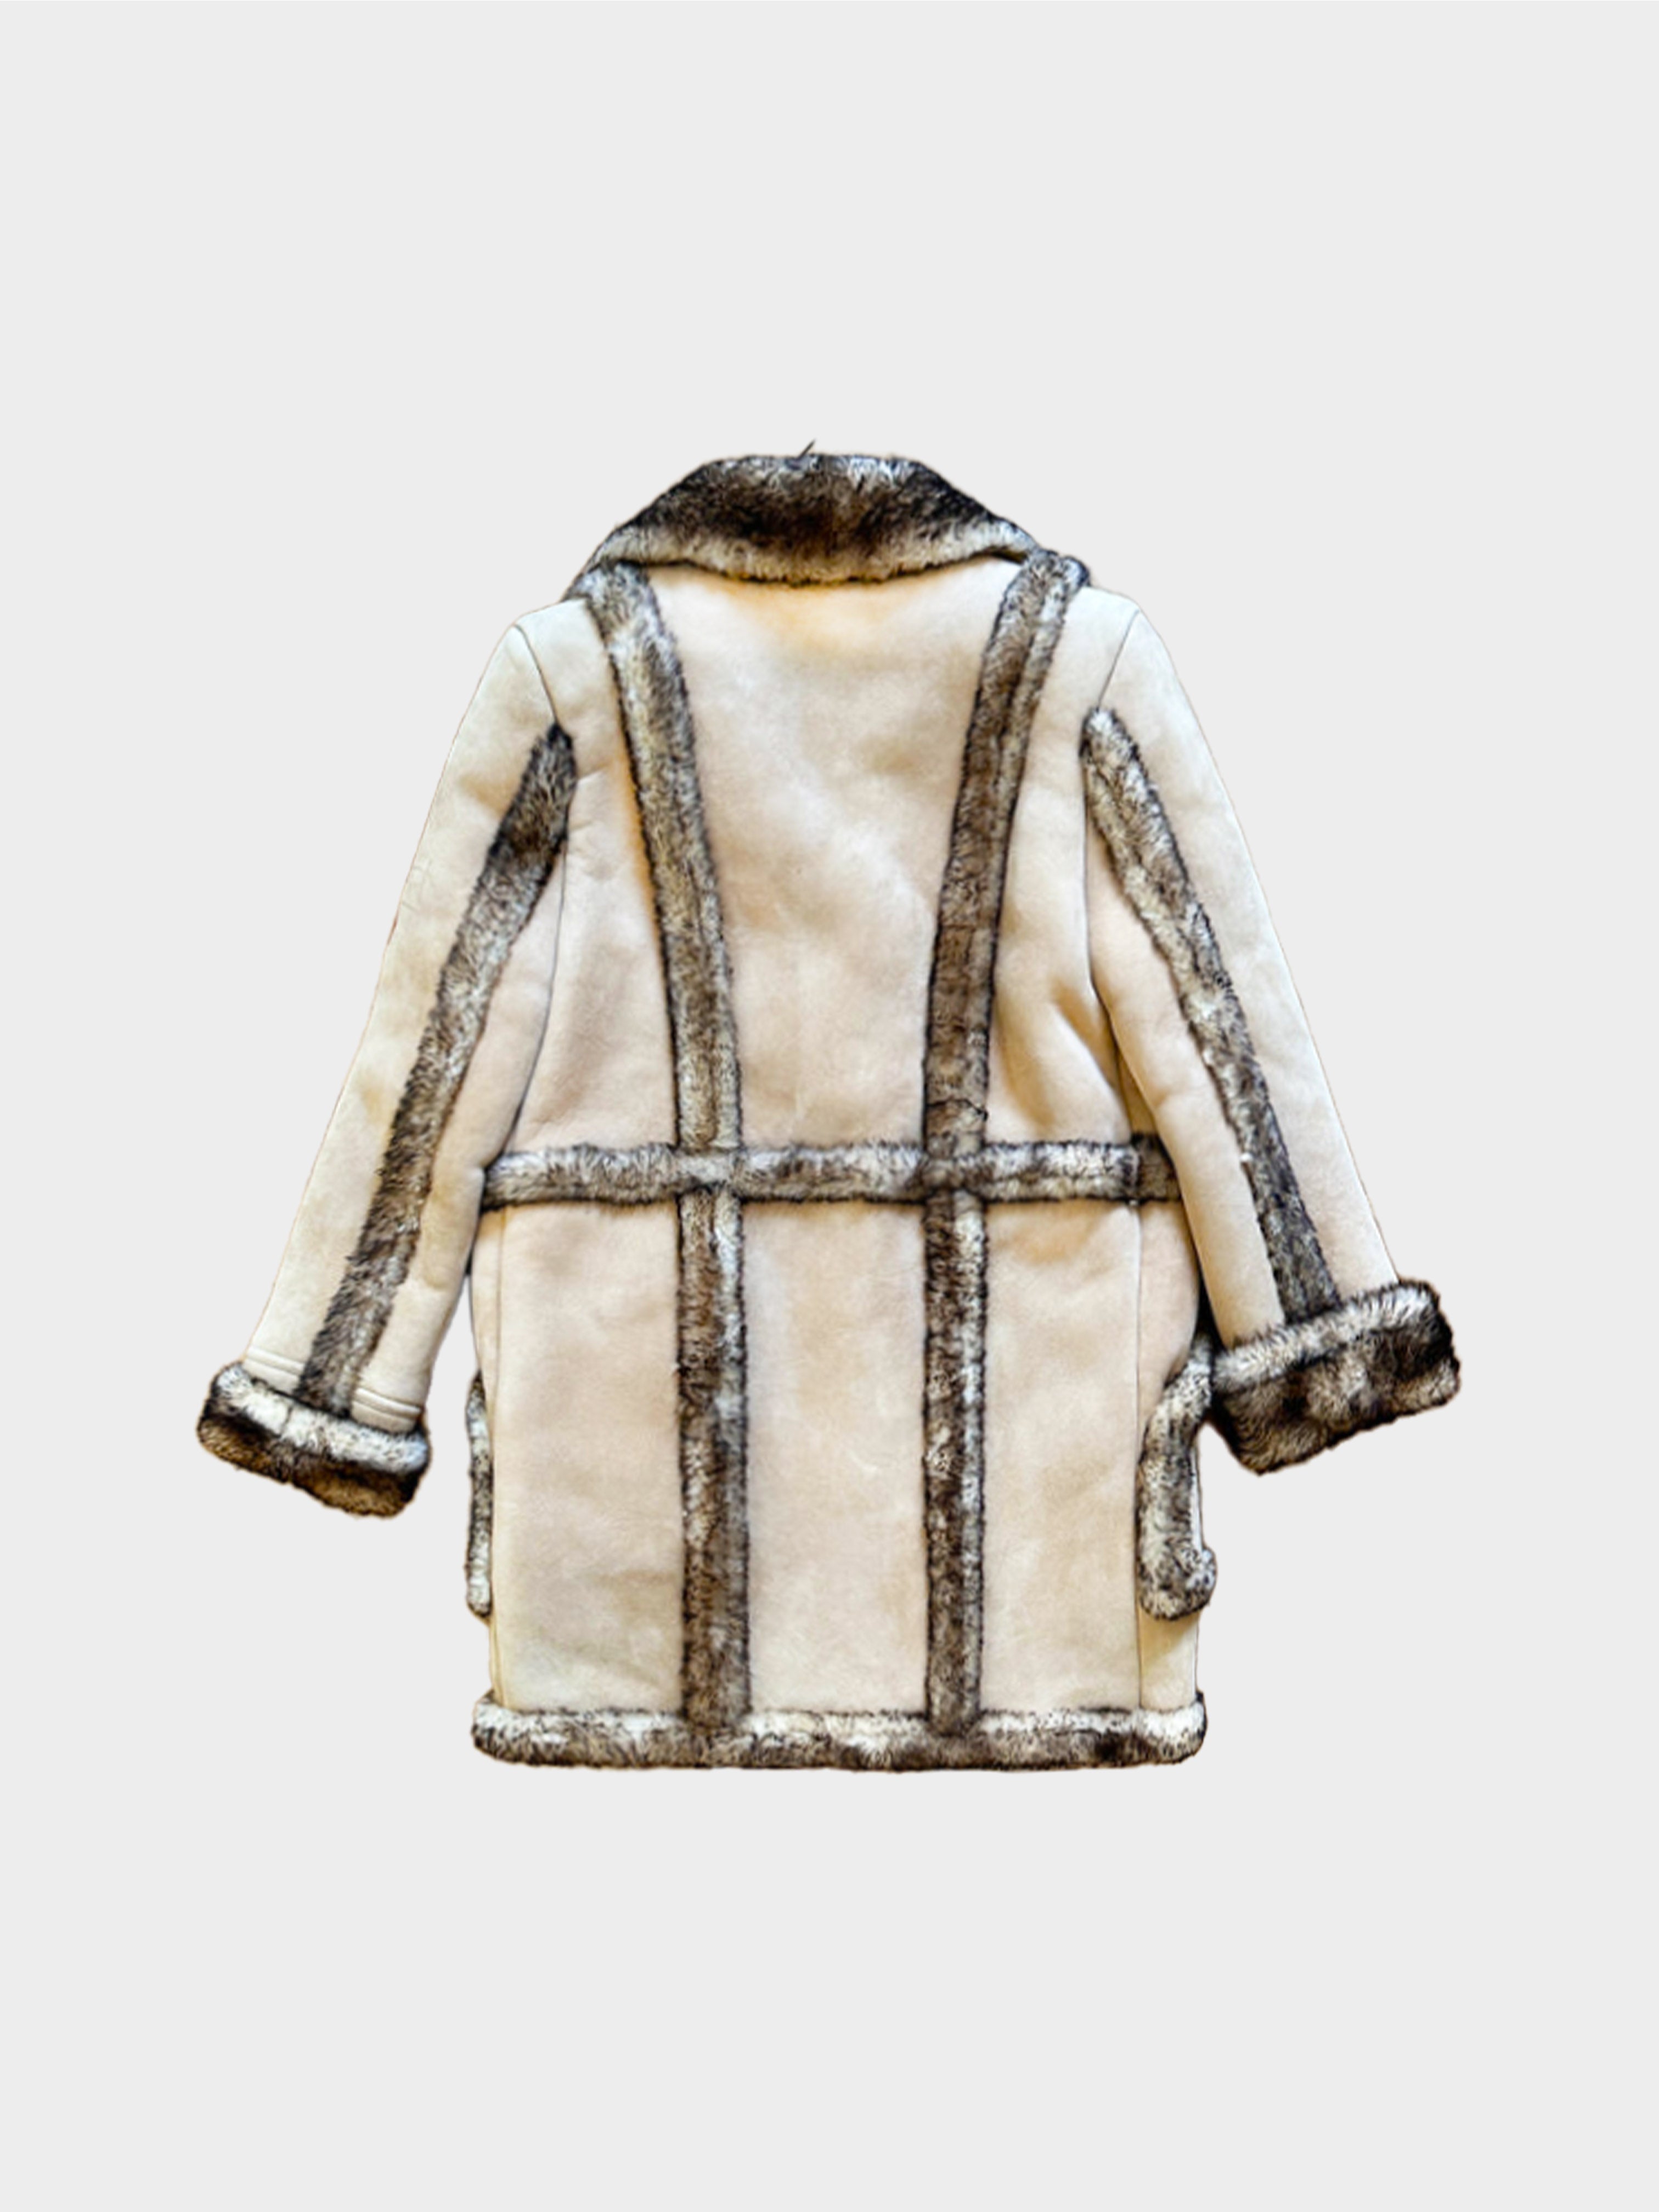 Louis Vuitton 2010s Prototype Shearling Fur Coat